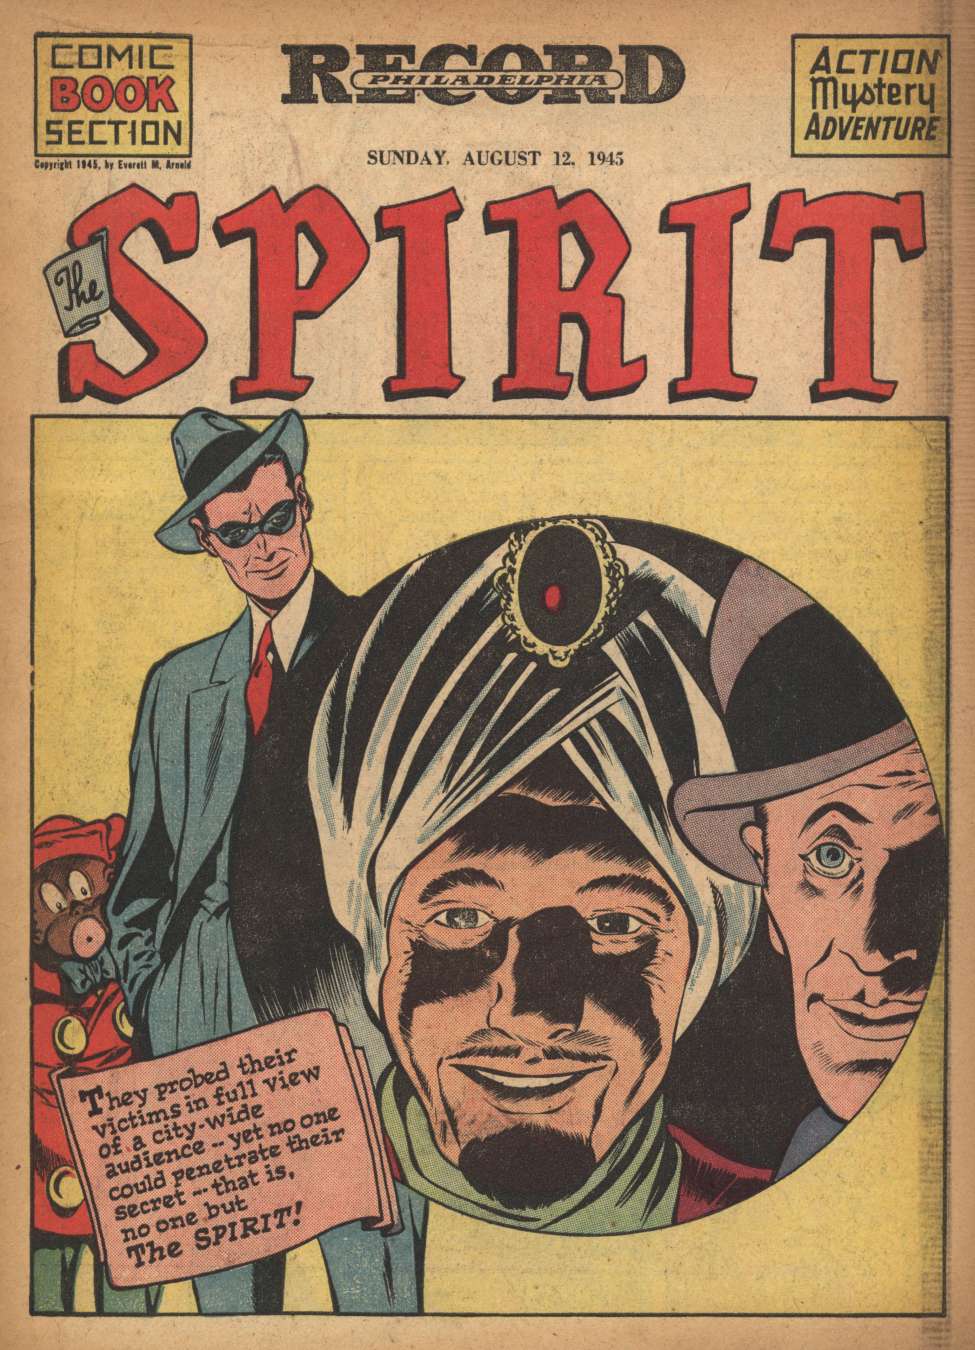 Comic Book Cover For The Spirit (1945-08-12) - Philadelphia Record